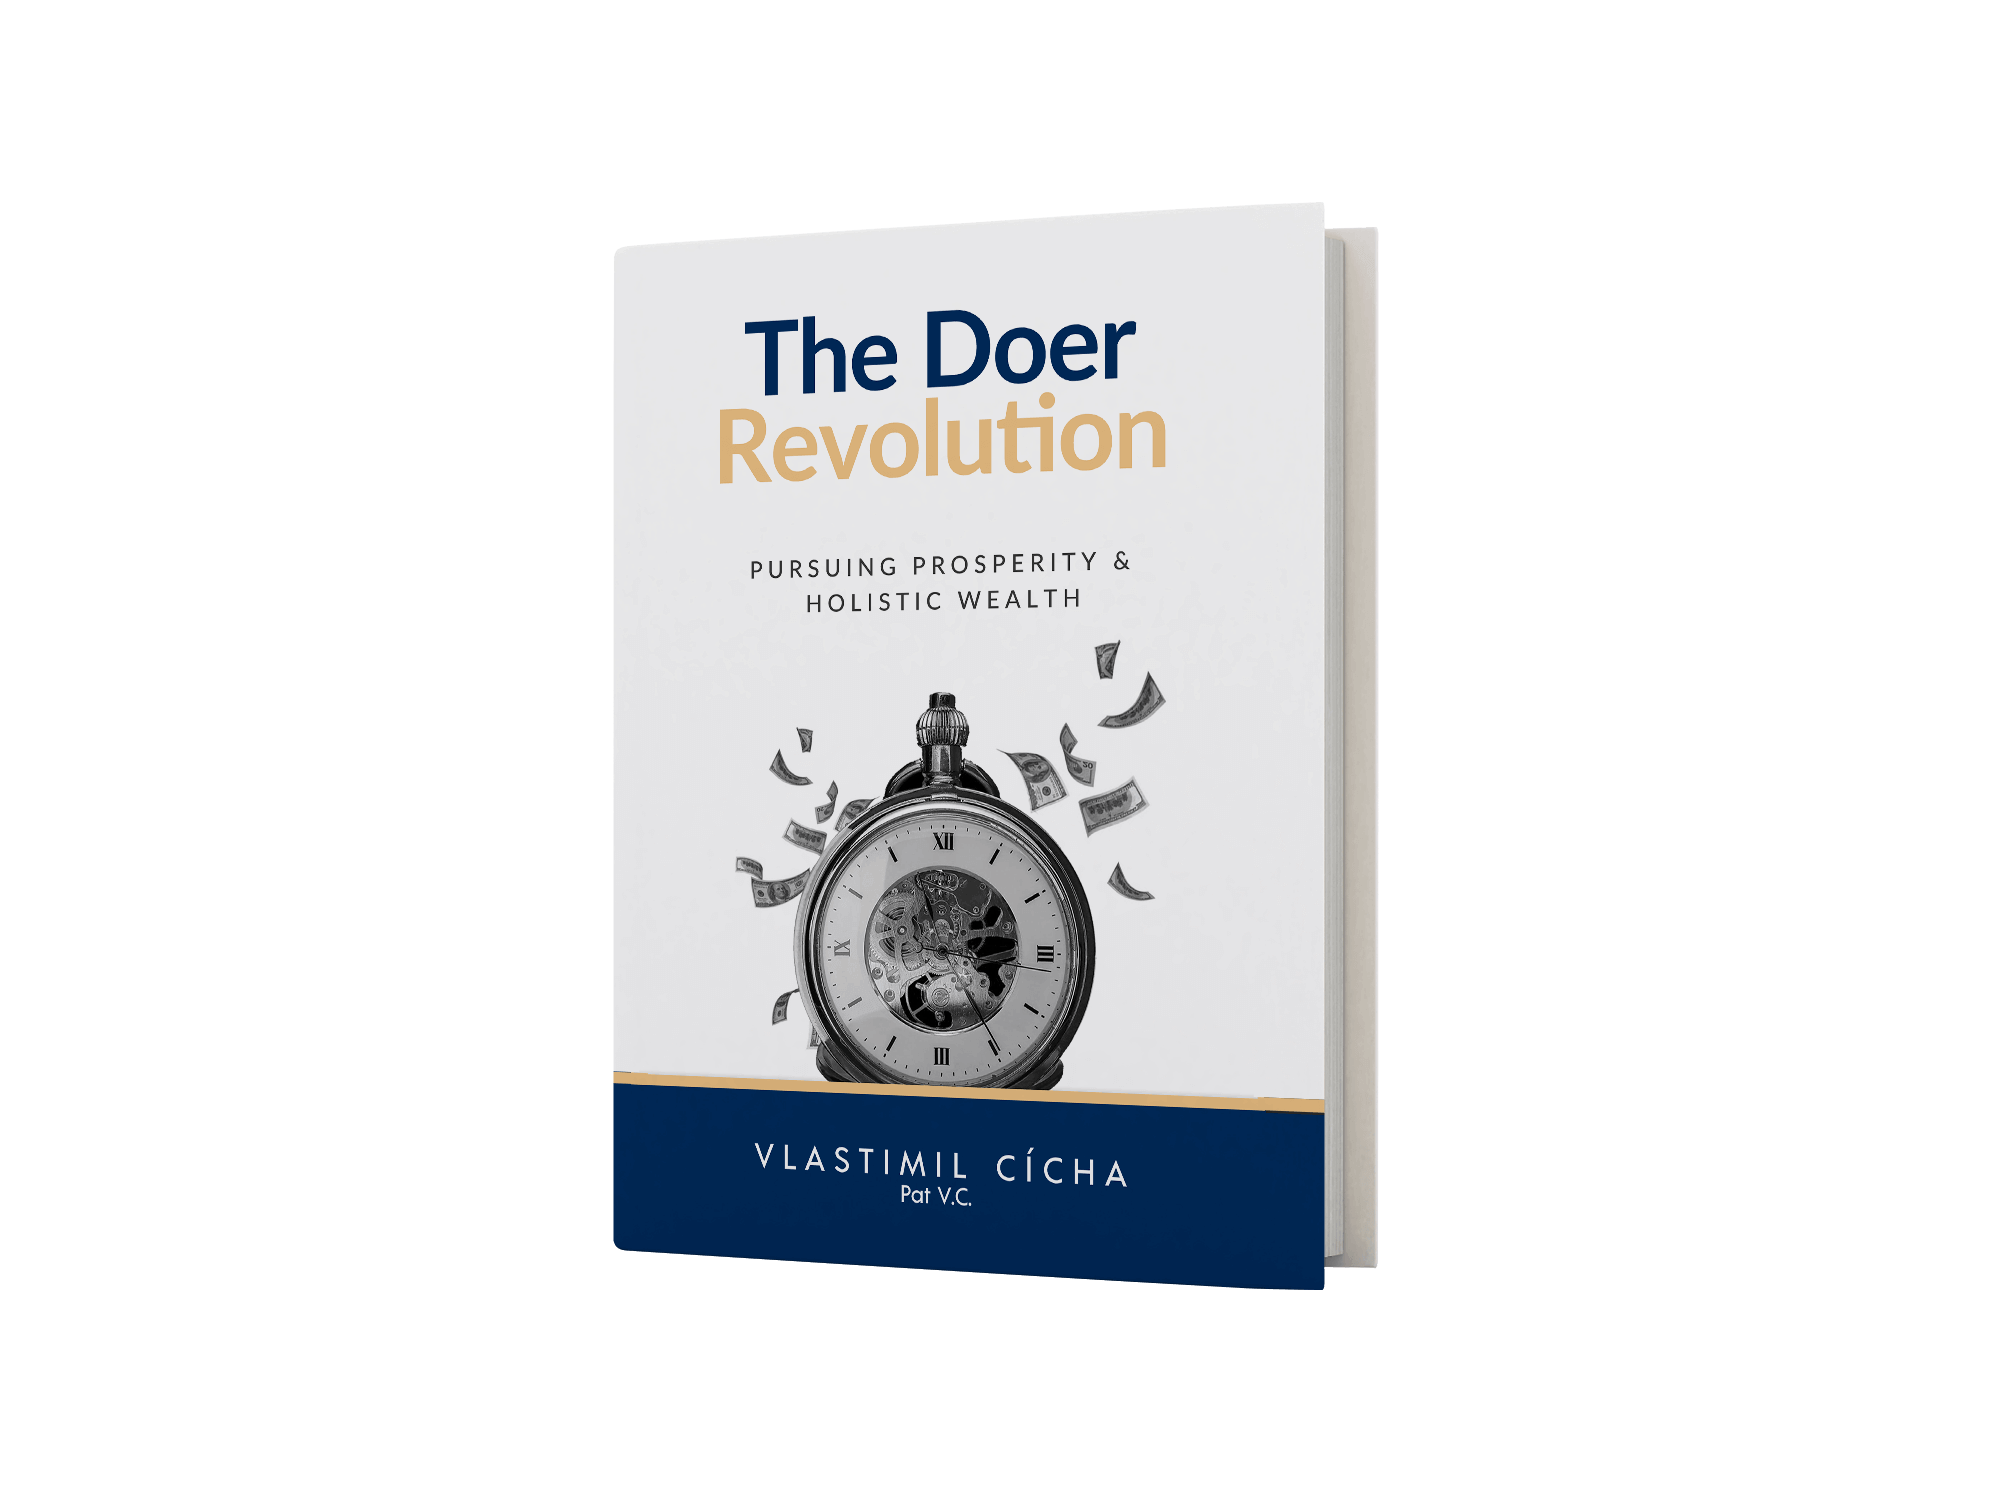 The Doer Revolution book single piece